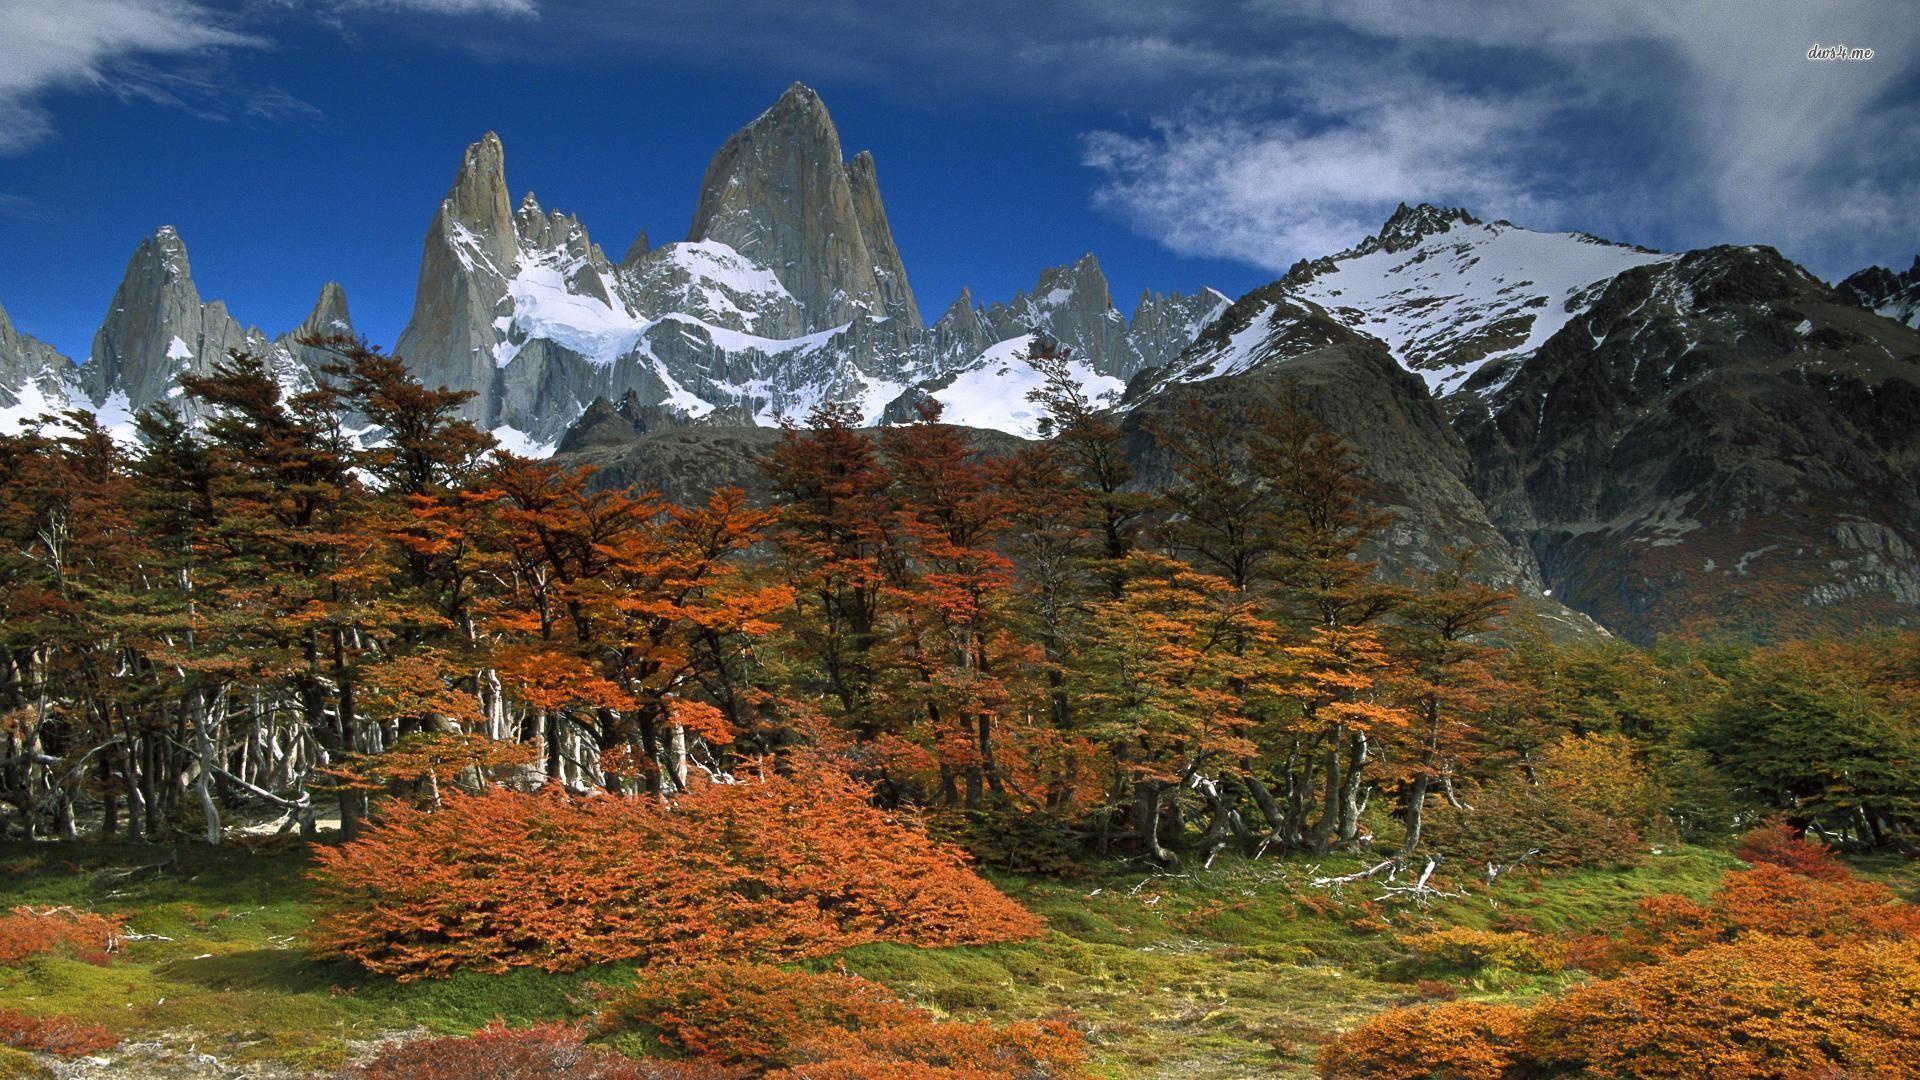 South America Patagonia